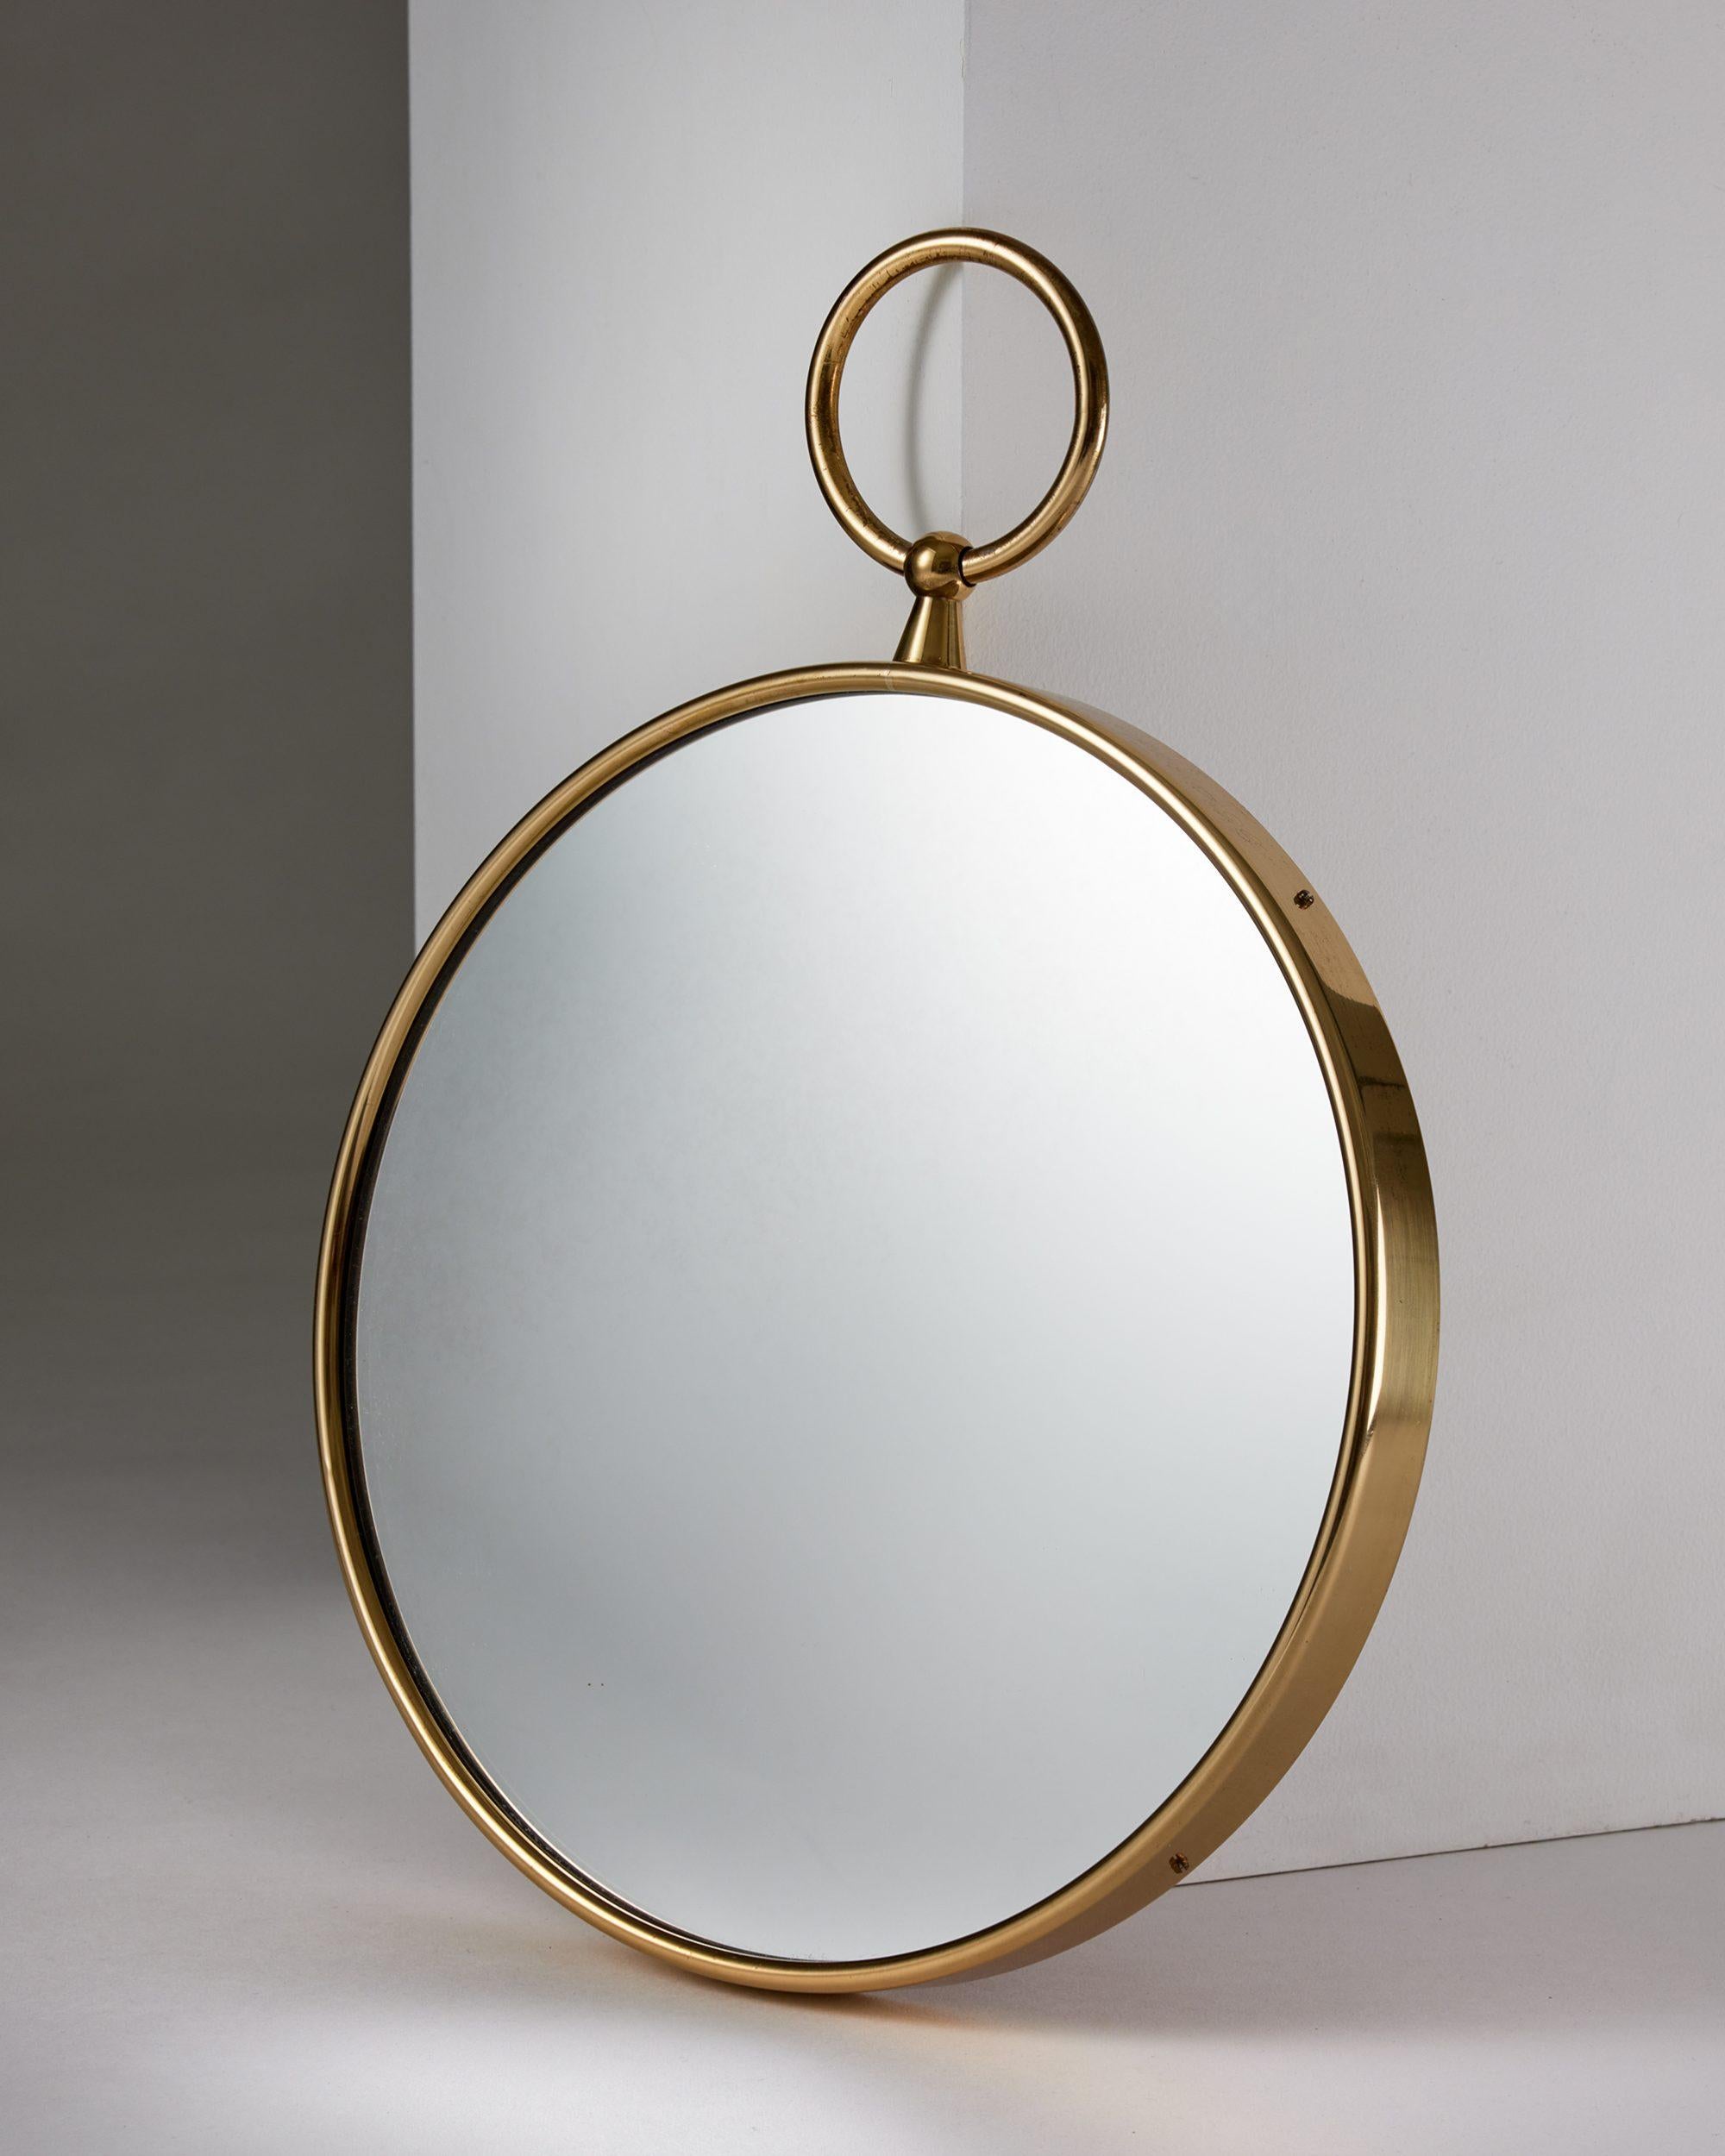 Round mirror designed by Piero Fornasetti for Svenskt Tenn,
Sweden, 1980s.

Brass and mirrored glass.